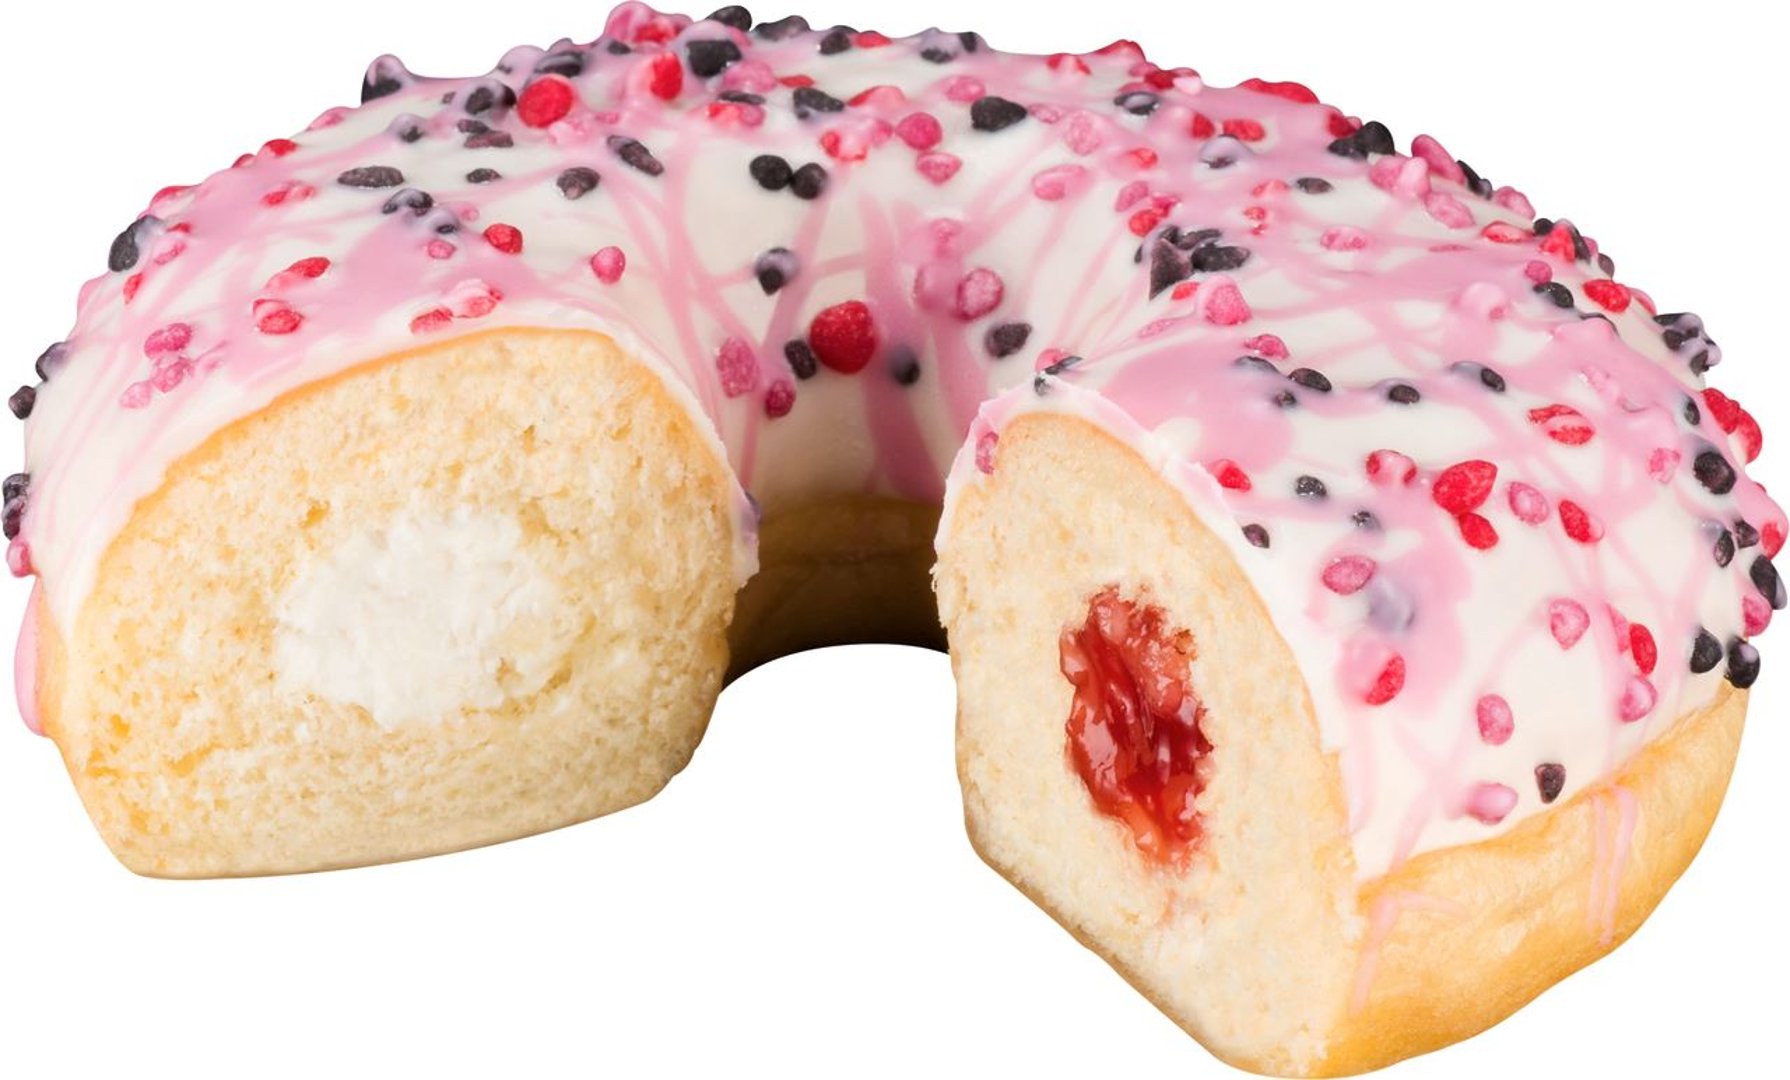 Baker & Baker - Donut Rasperry Cheesecake Sensation, tiefgefroren, fertig gebacken - 4 x 69 g Stücke